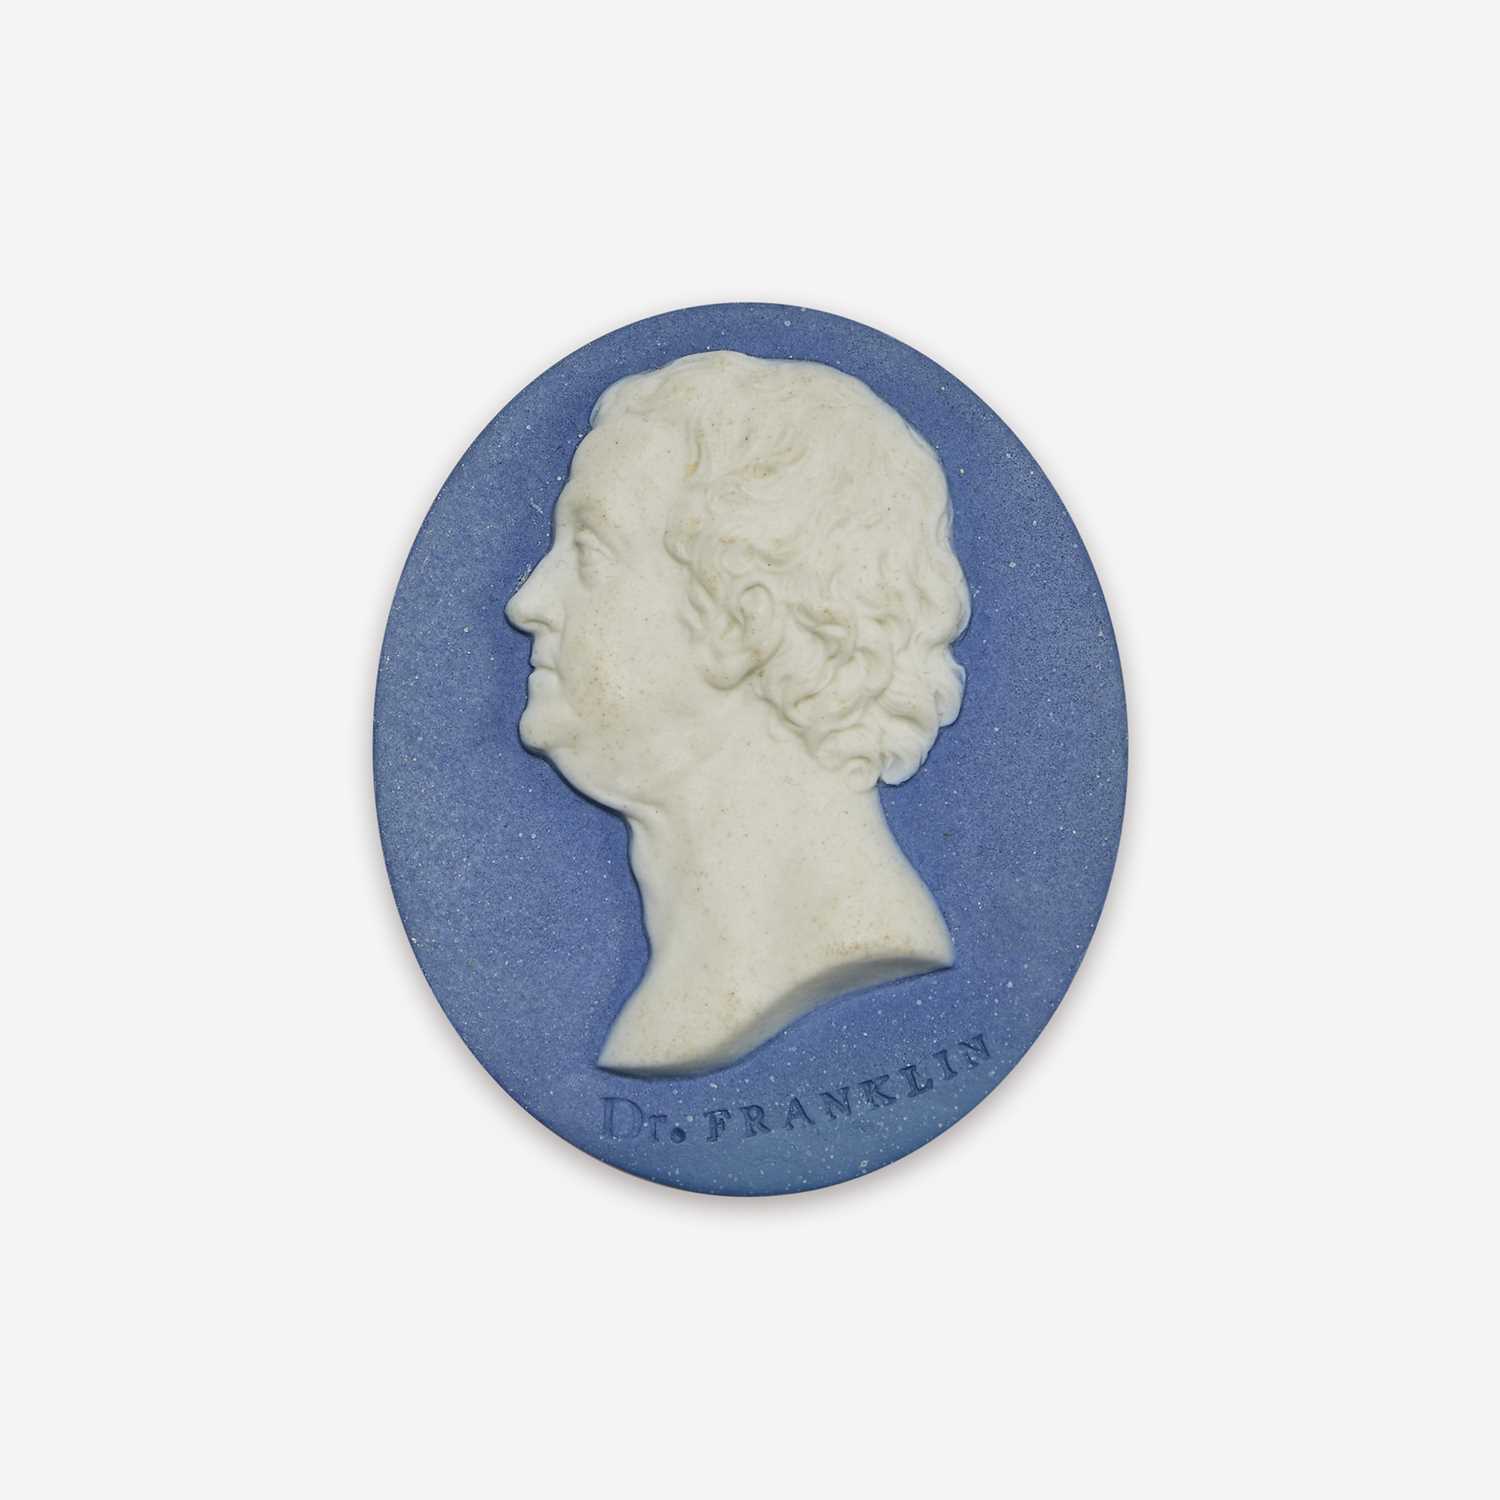 Lot 35 - A Wedgwood & Bentley blue and white Jaspwerware portrait medallion of Benjamin Franklin (1706-1790)